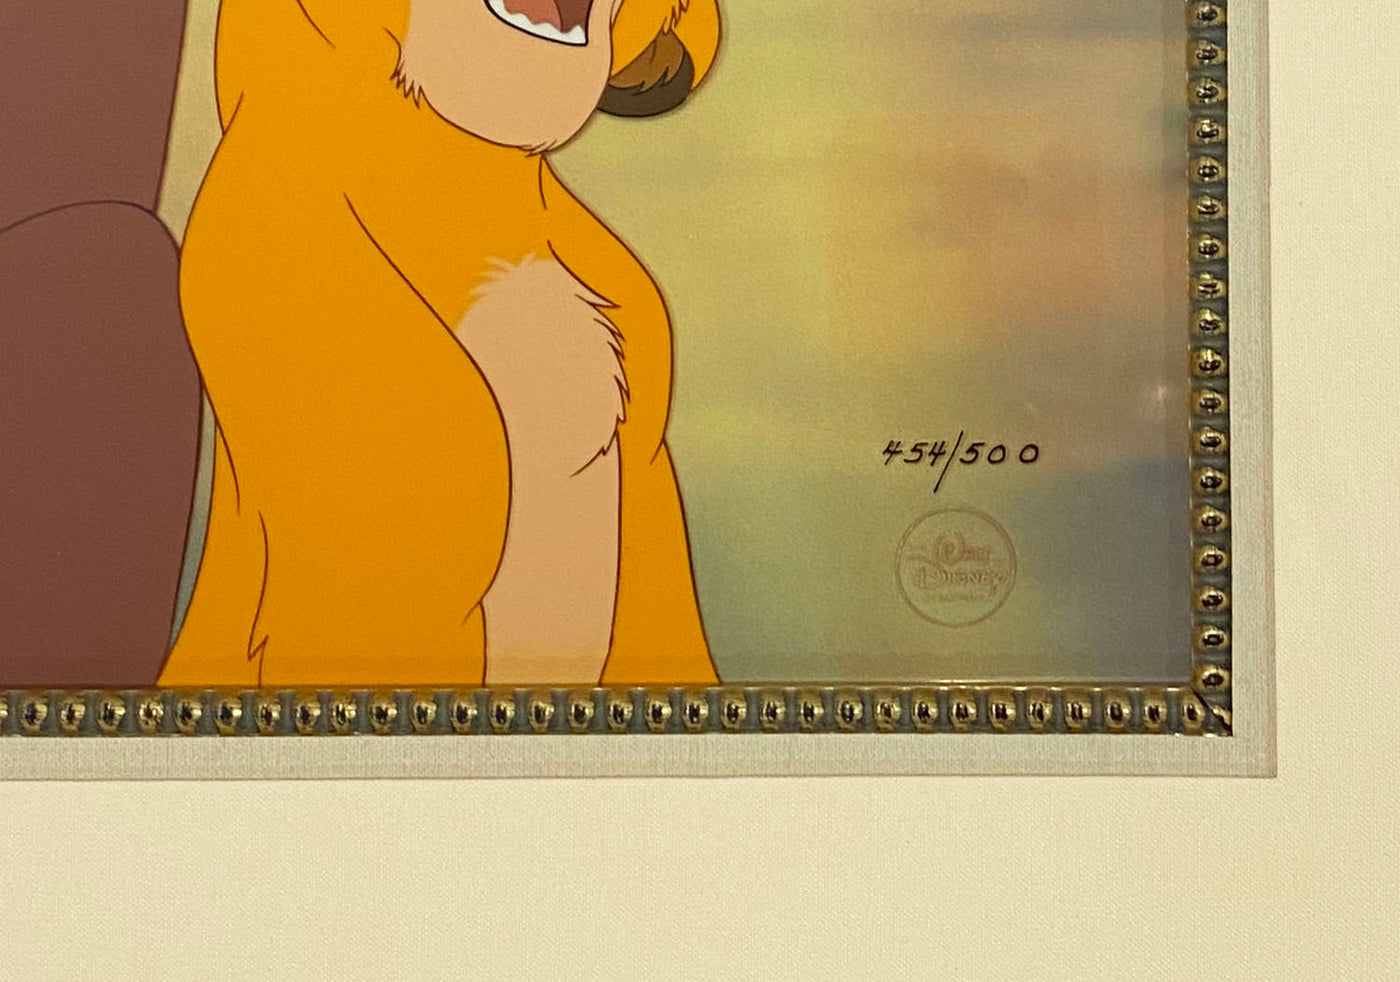 Original Walt Disney Limited Edition Cel "Hakuna Matata" featuring Simba, Pumbaa, and Timon